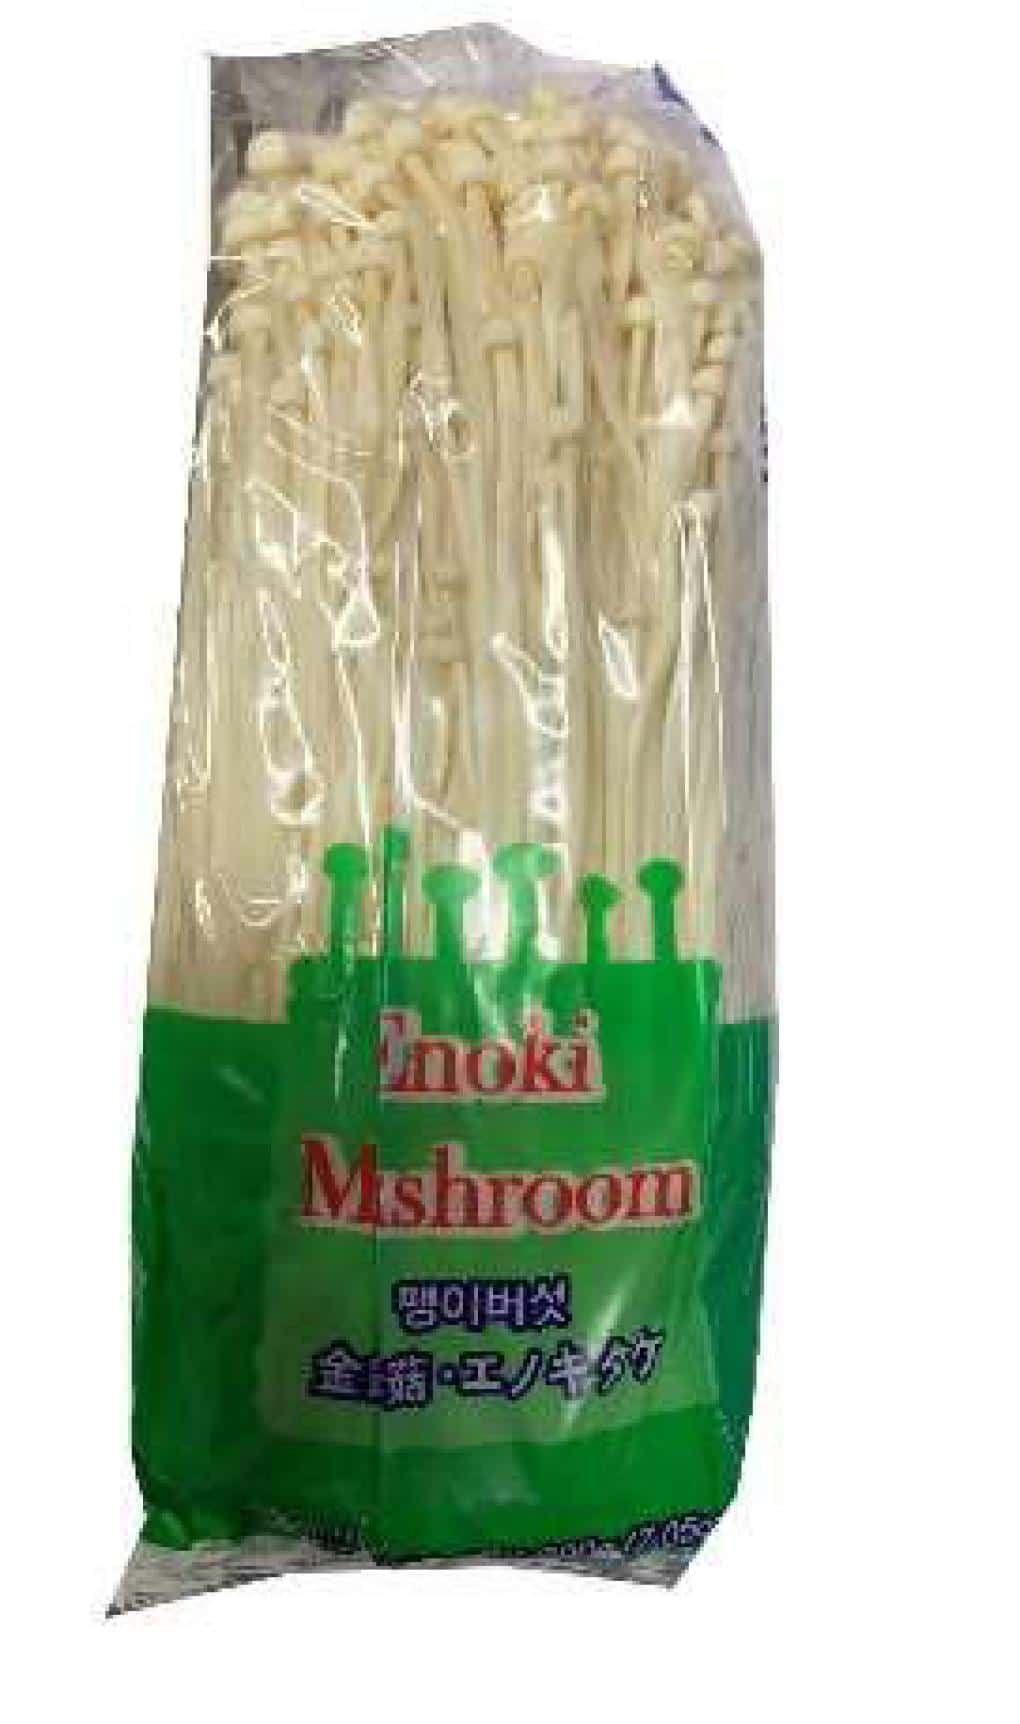 H&C Food Recalls Enoki Mushrooms for Listeria Risk